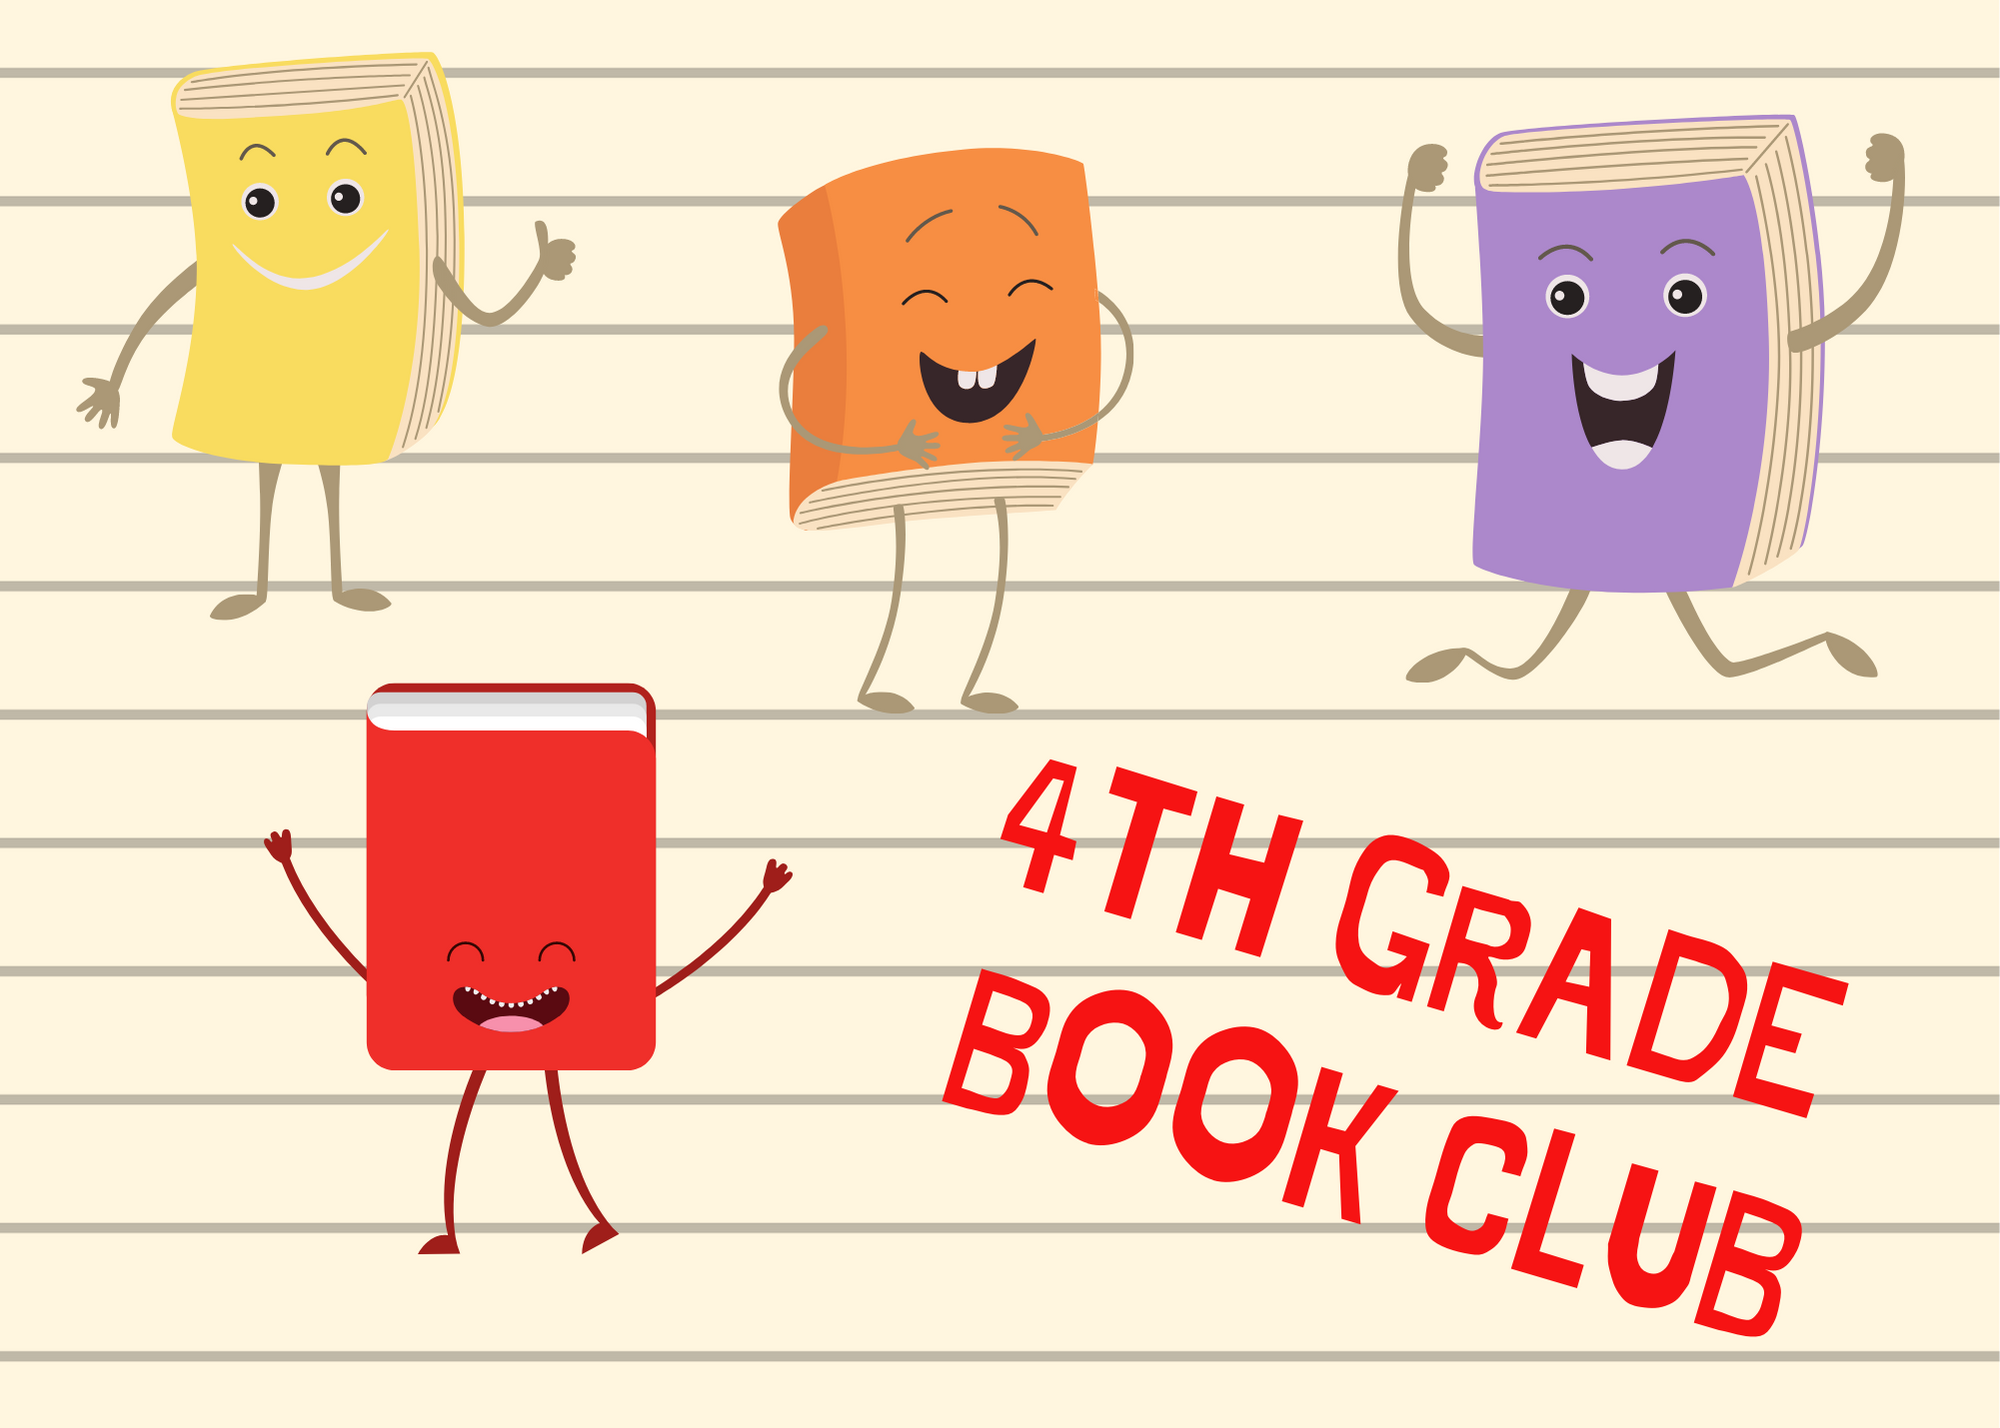 Fourth Grade Book Club